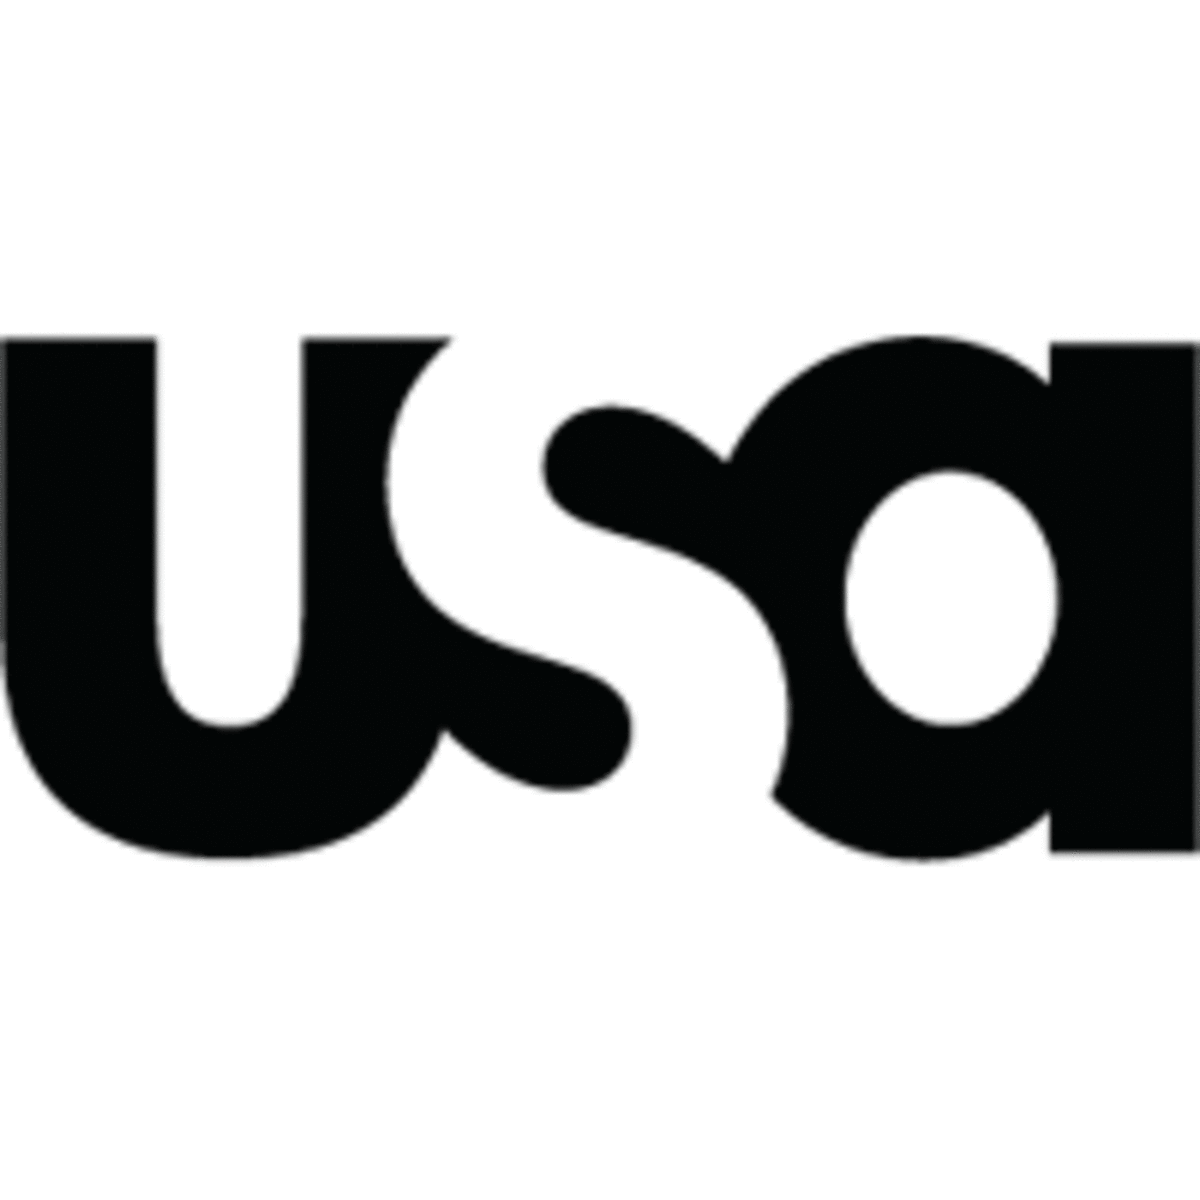 USA Network Logo - USA Network Taps Carlton Cuse For New Pilot - Multichannel